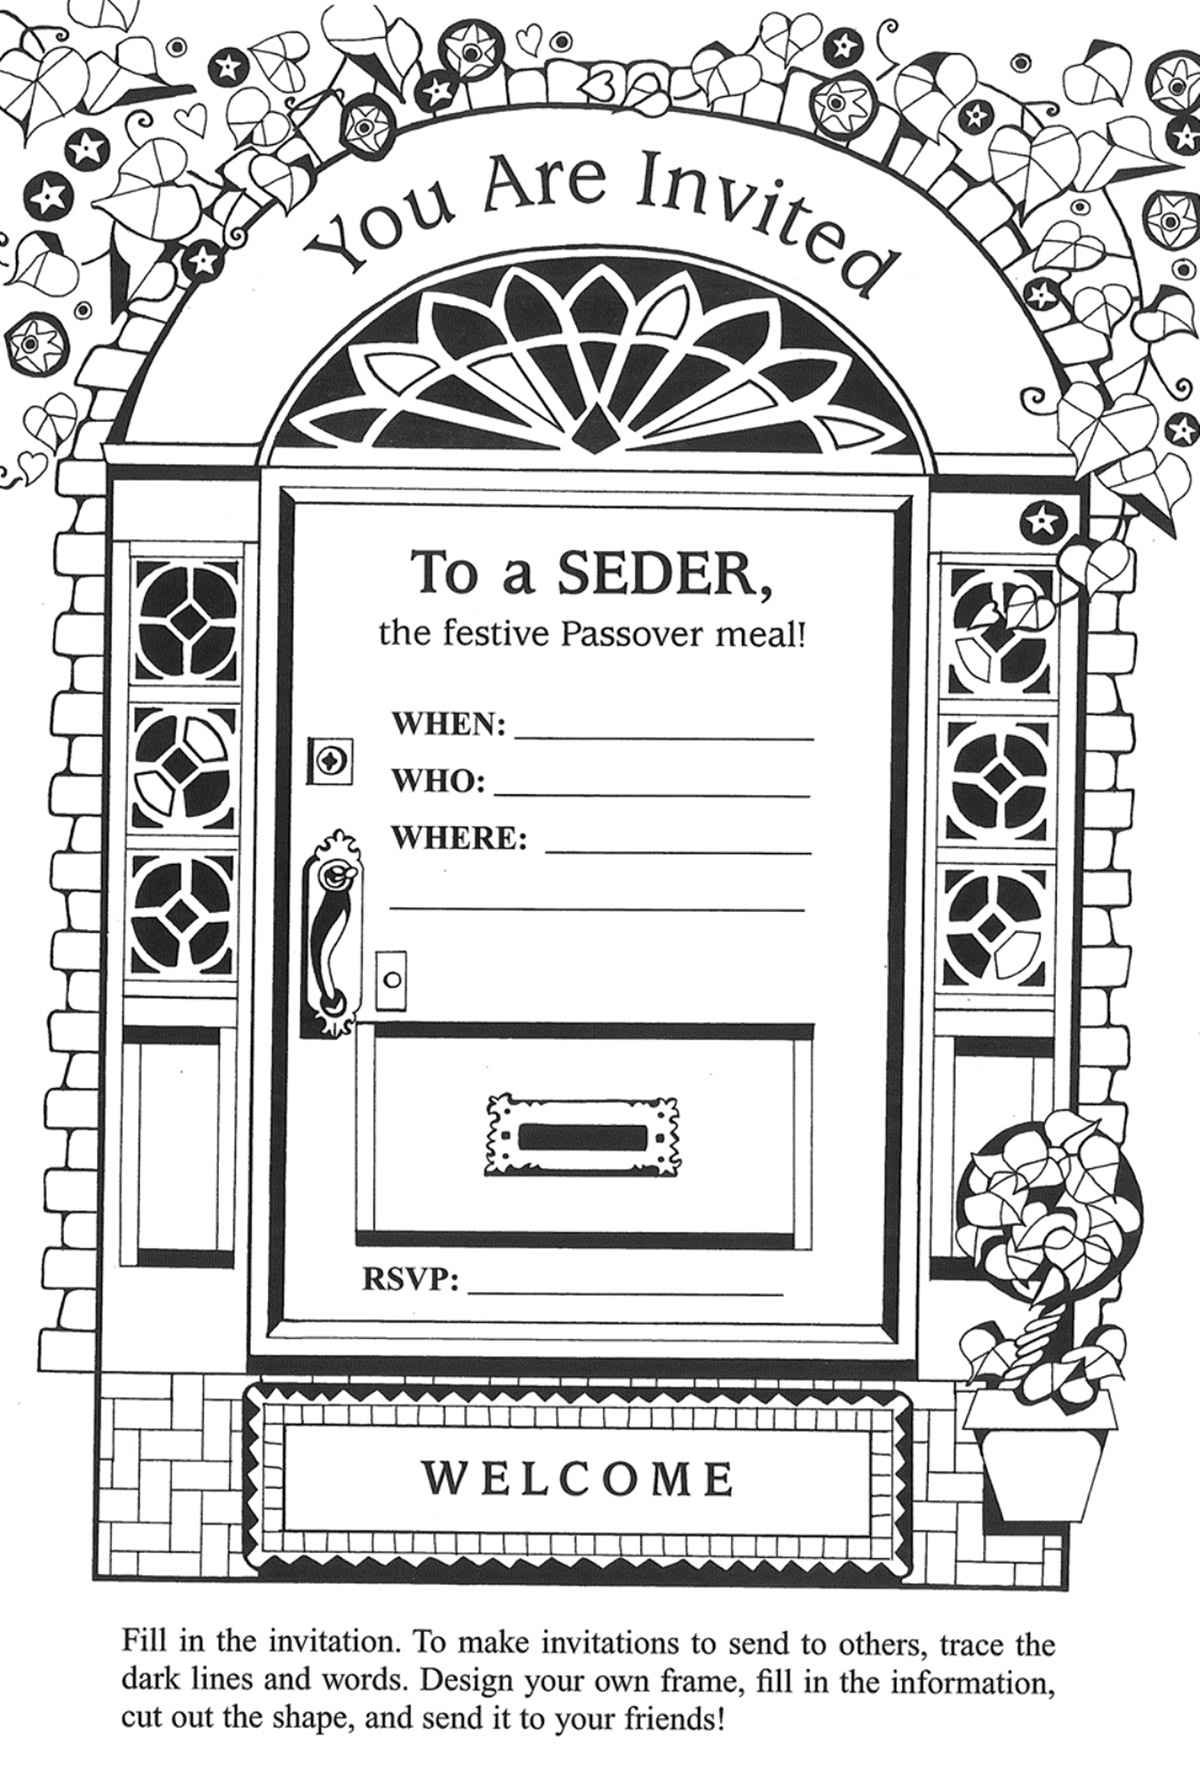 Passover seder activity book